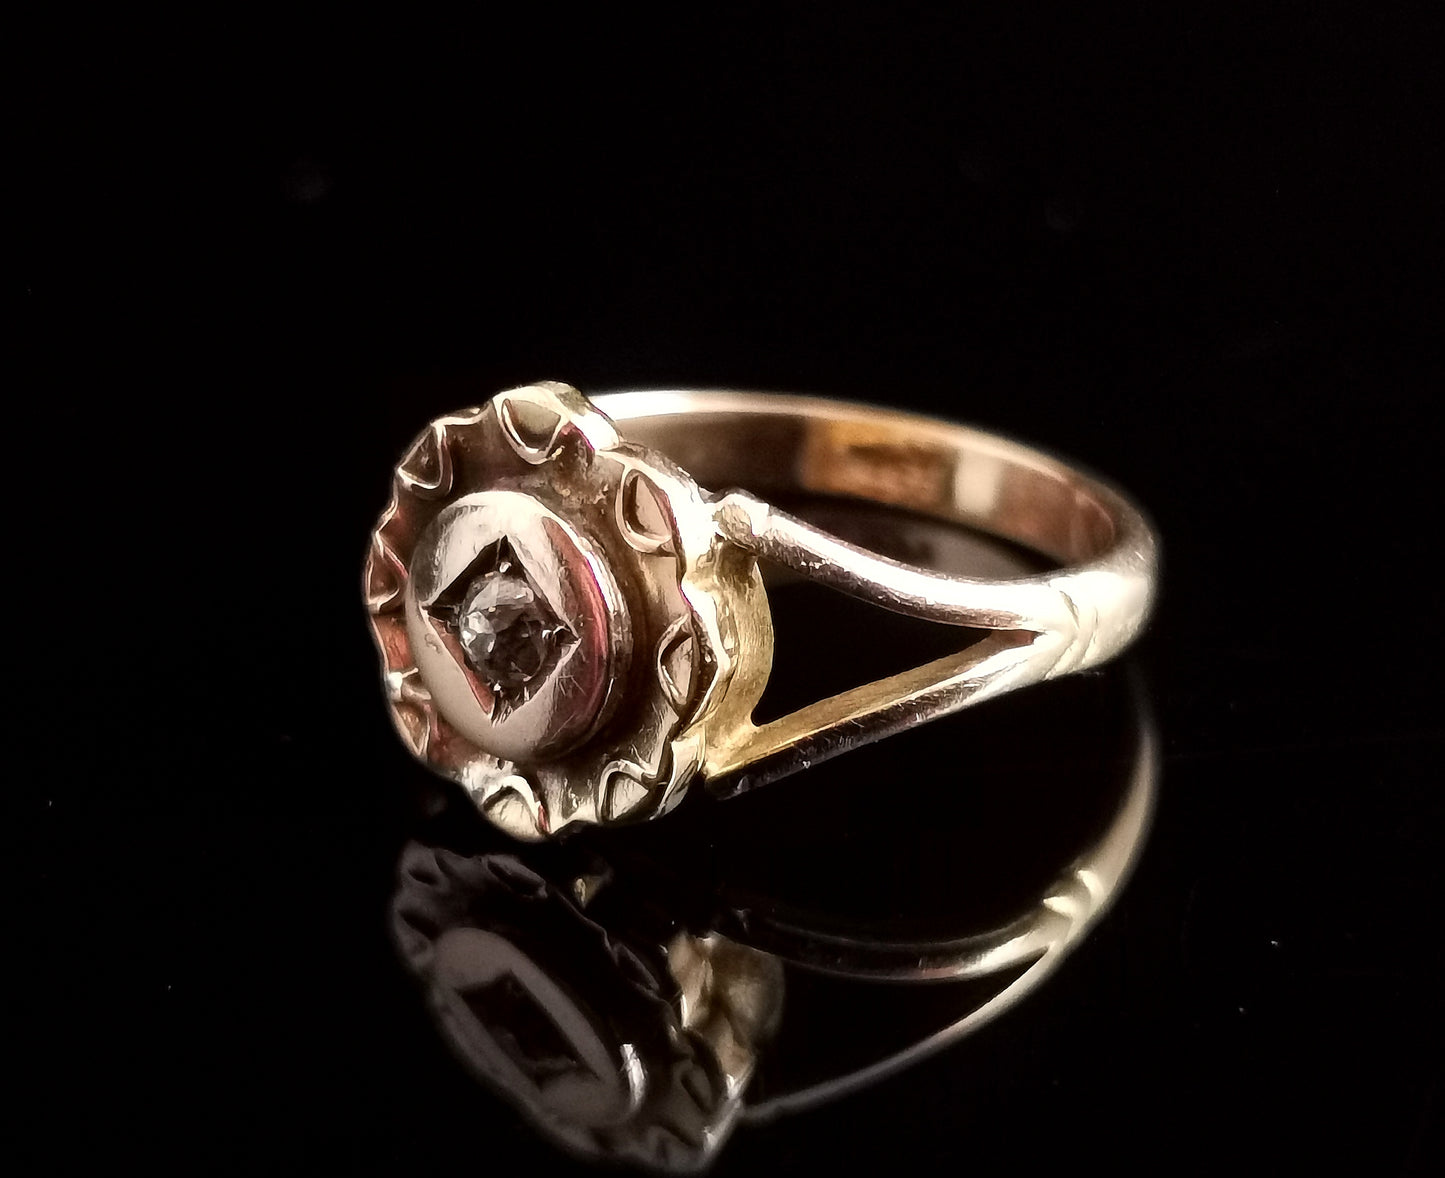 Antique diamond signet ring, 18ct gold